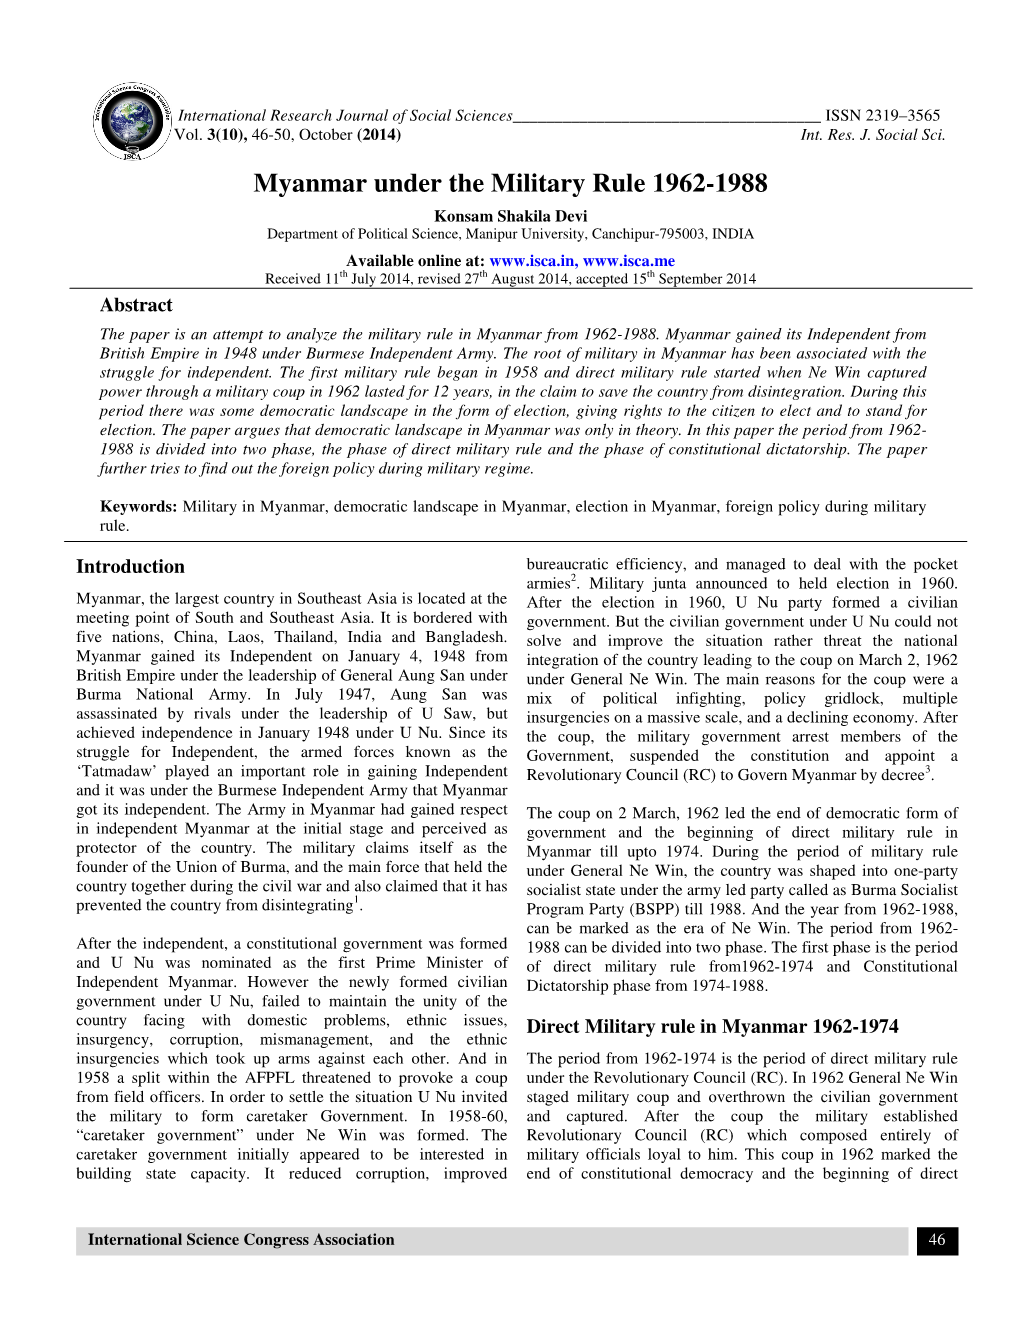 Myanmar Under the Military Rule 1962-1988